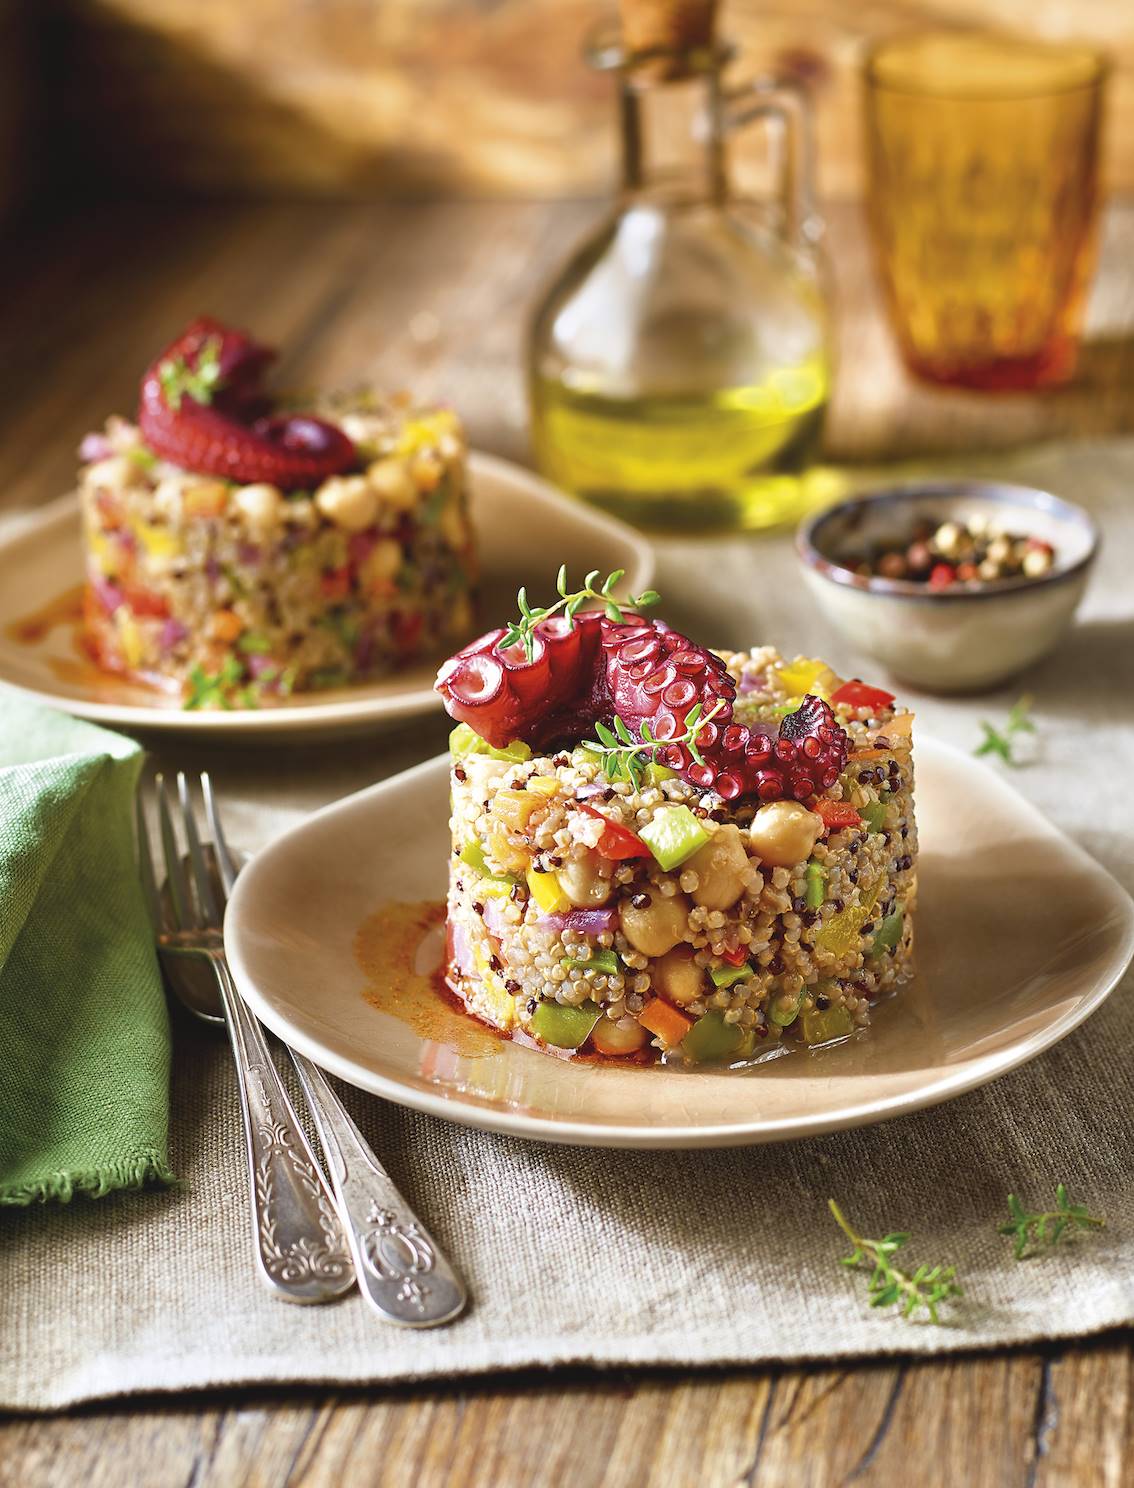 Receta baja en calorías: timbal de quinoa, verduras y pulpo.